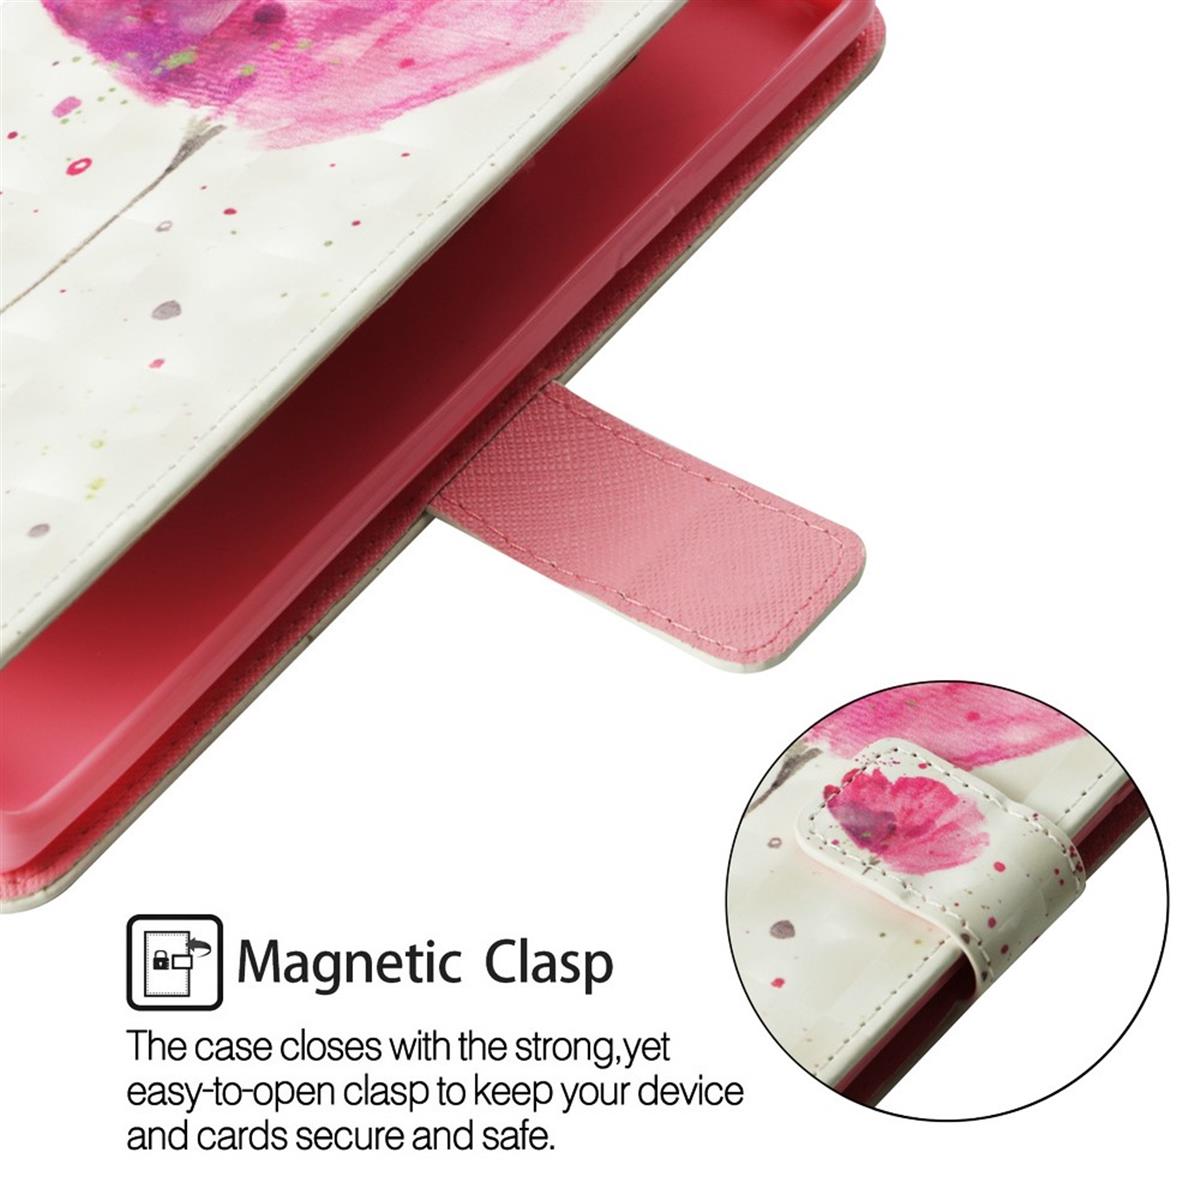 Hülle für Samsung Galaxy S10e Handyhülle Flip Case Schutzhülle Motiv Blume rosa